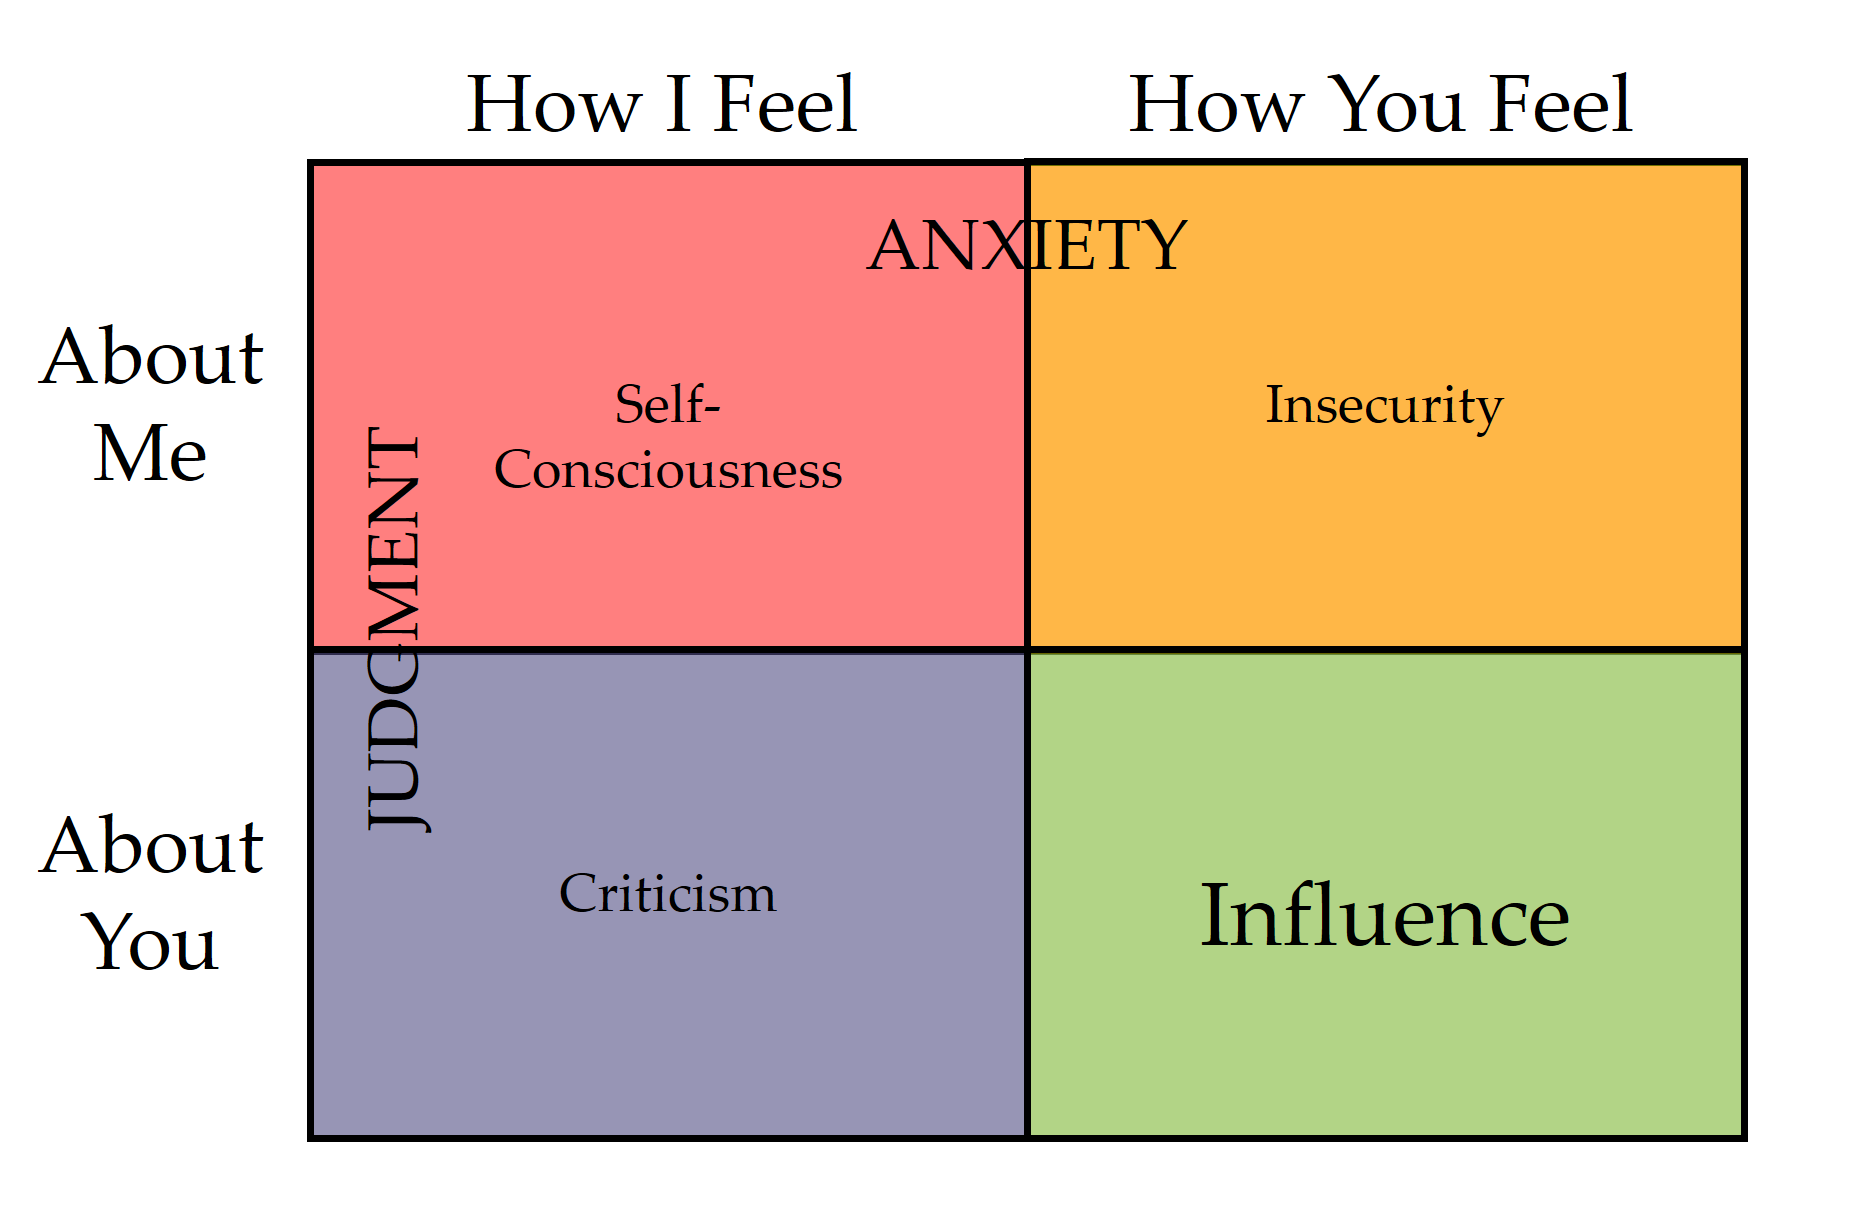 The Influence Quadrant